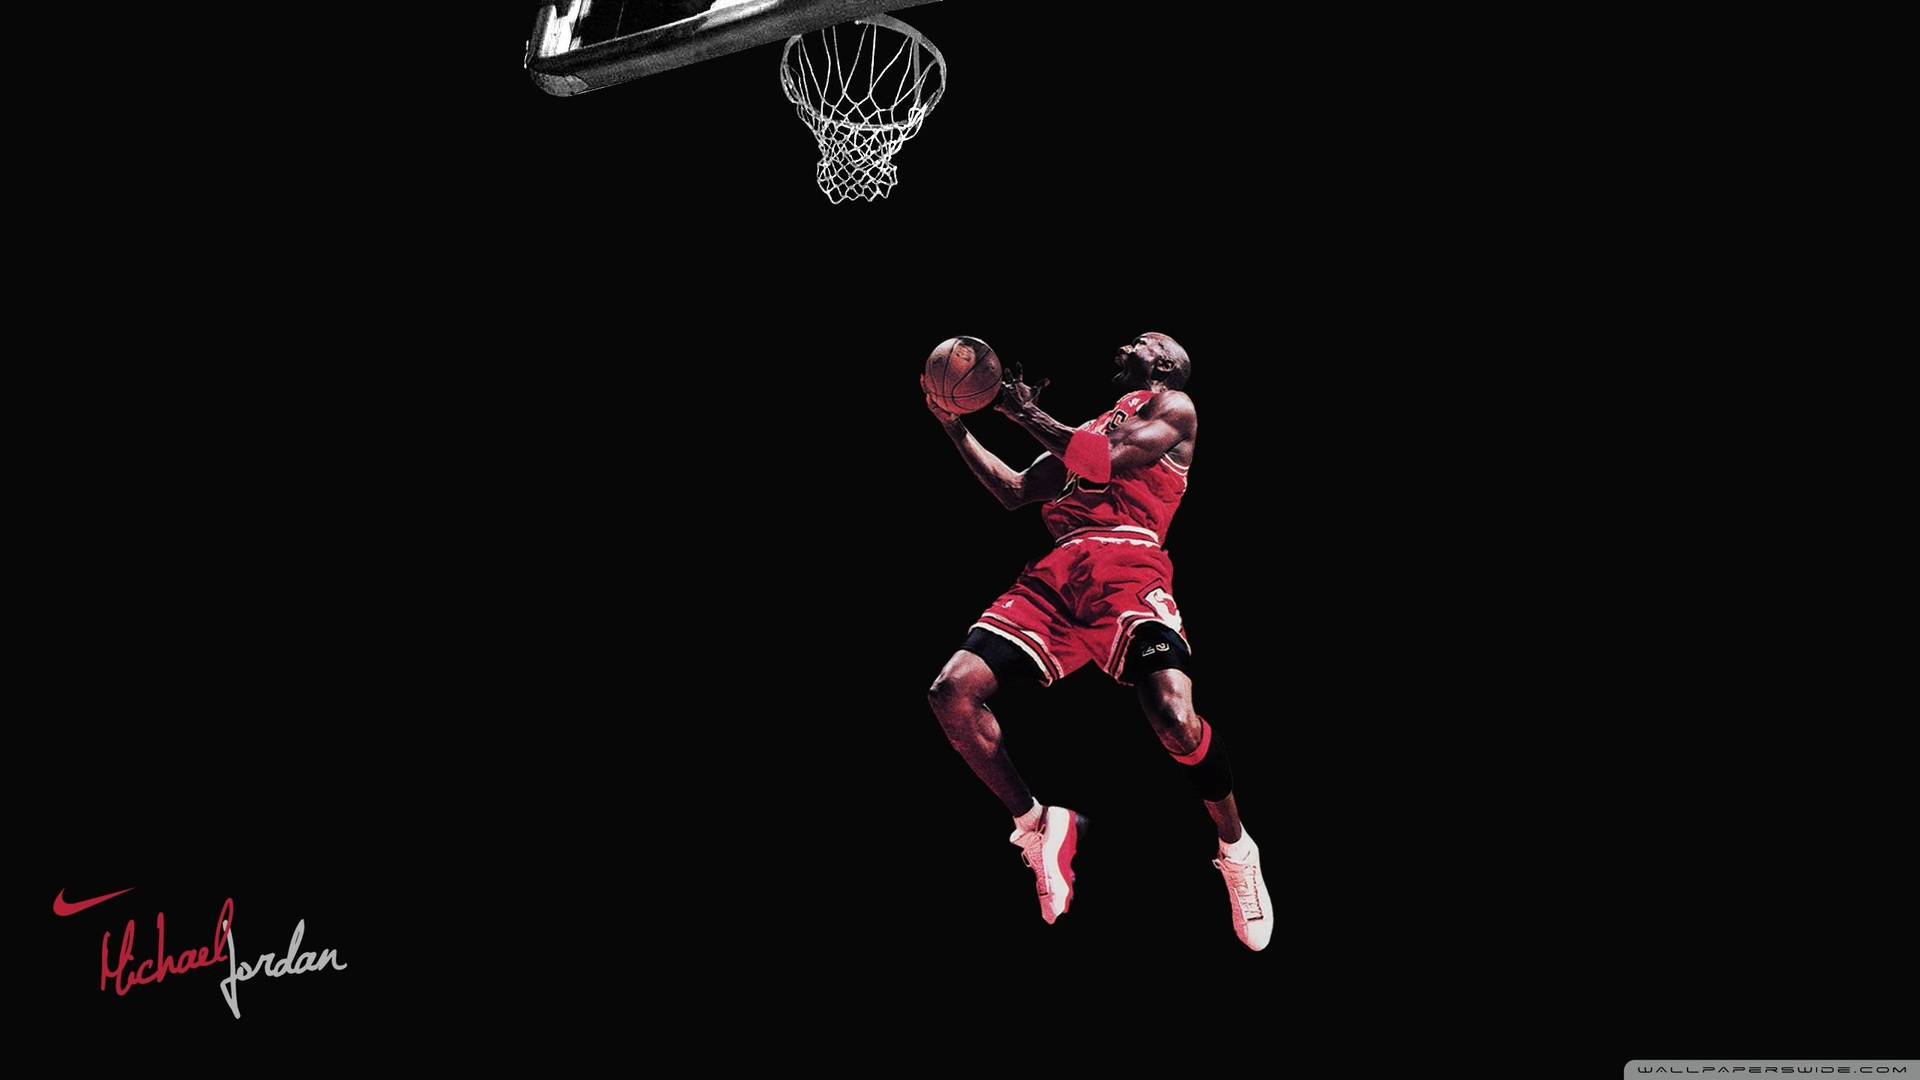 Poster Shows Michael Jordan Hd Picture